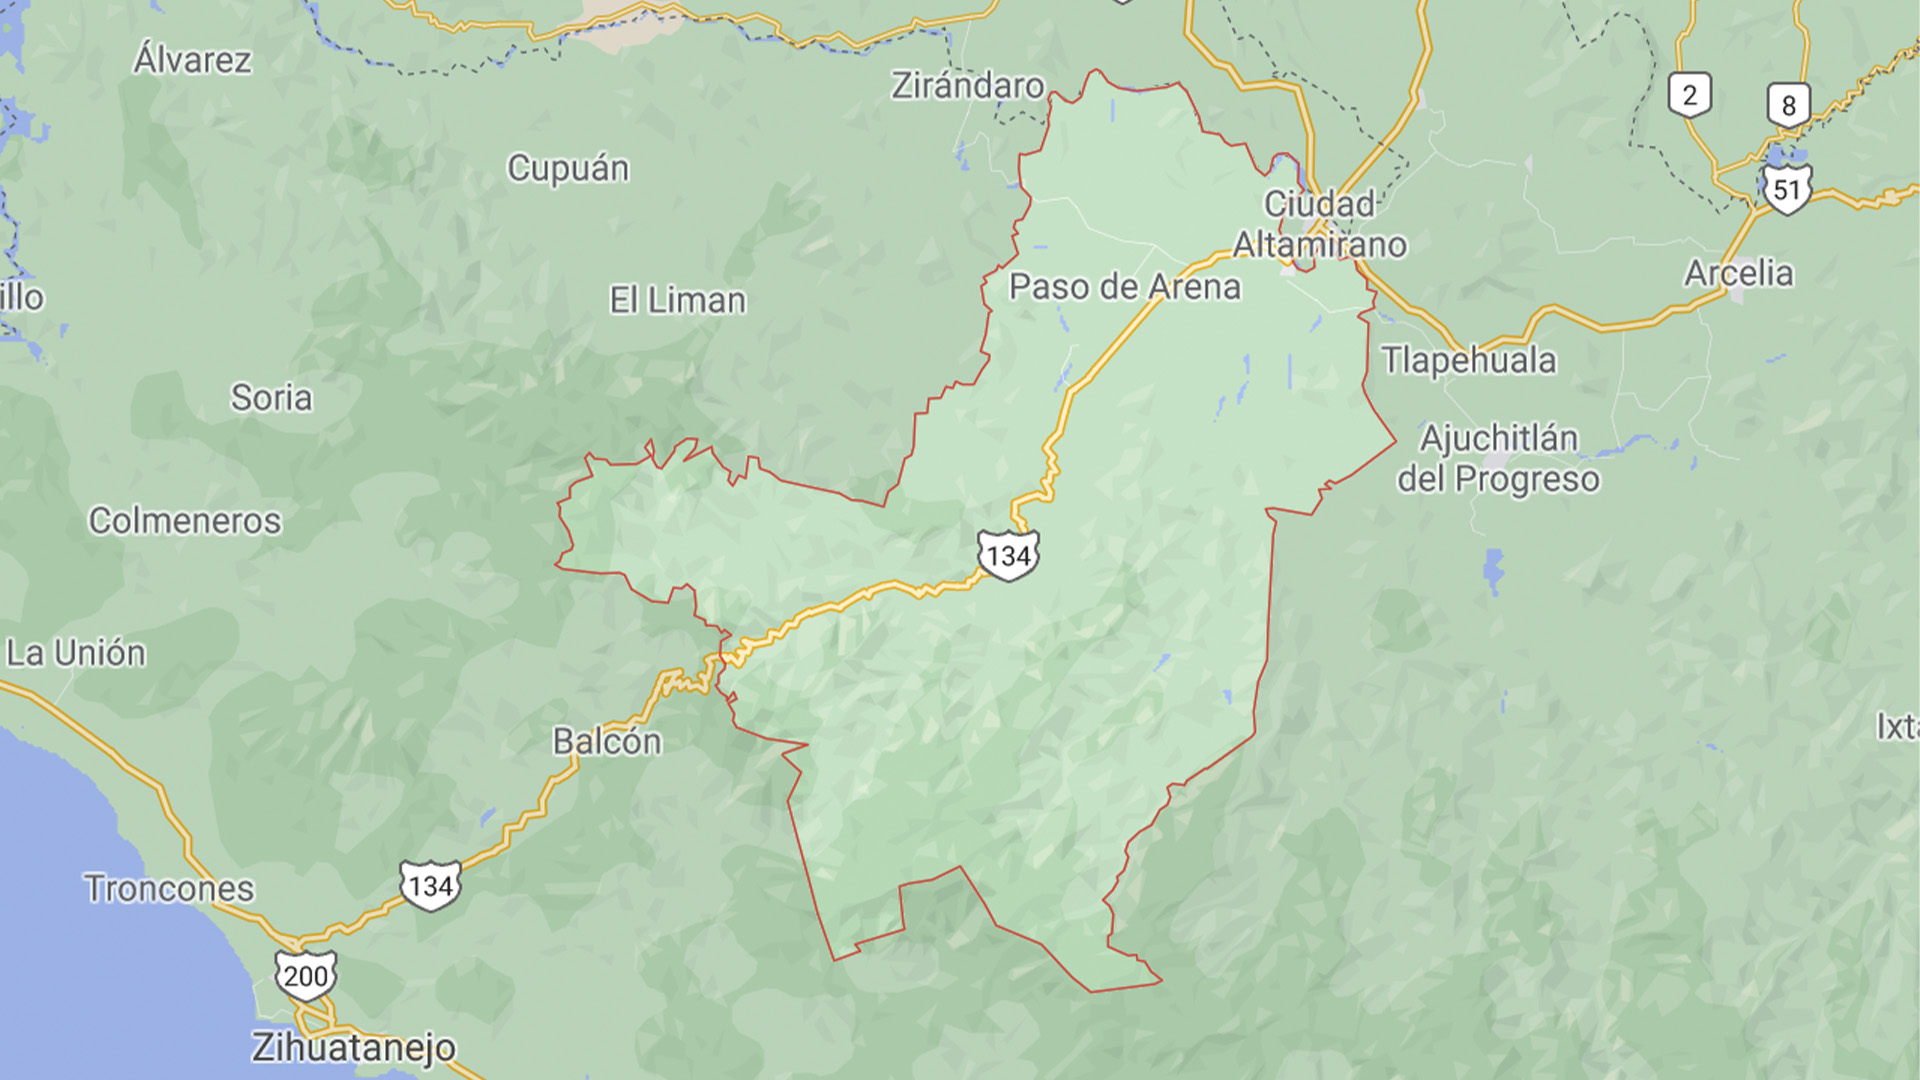 Municipality of Coyuca de Catalán (Photo: Google Maps)